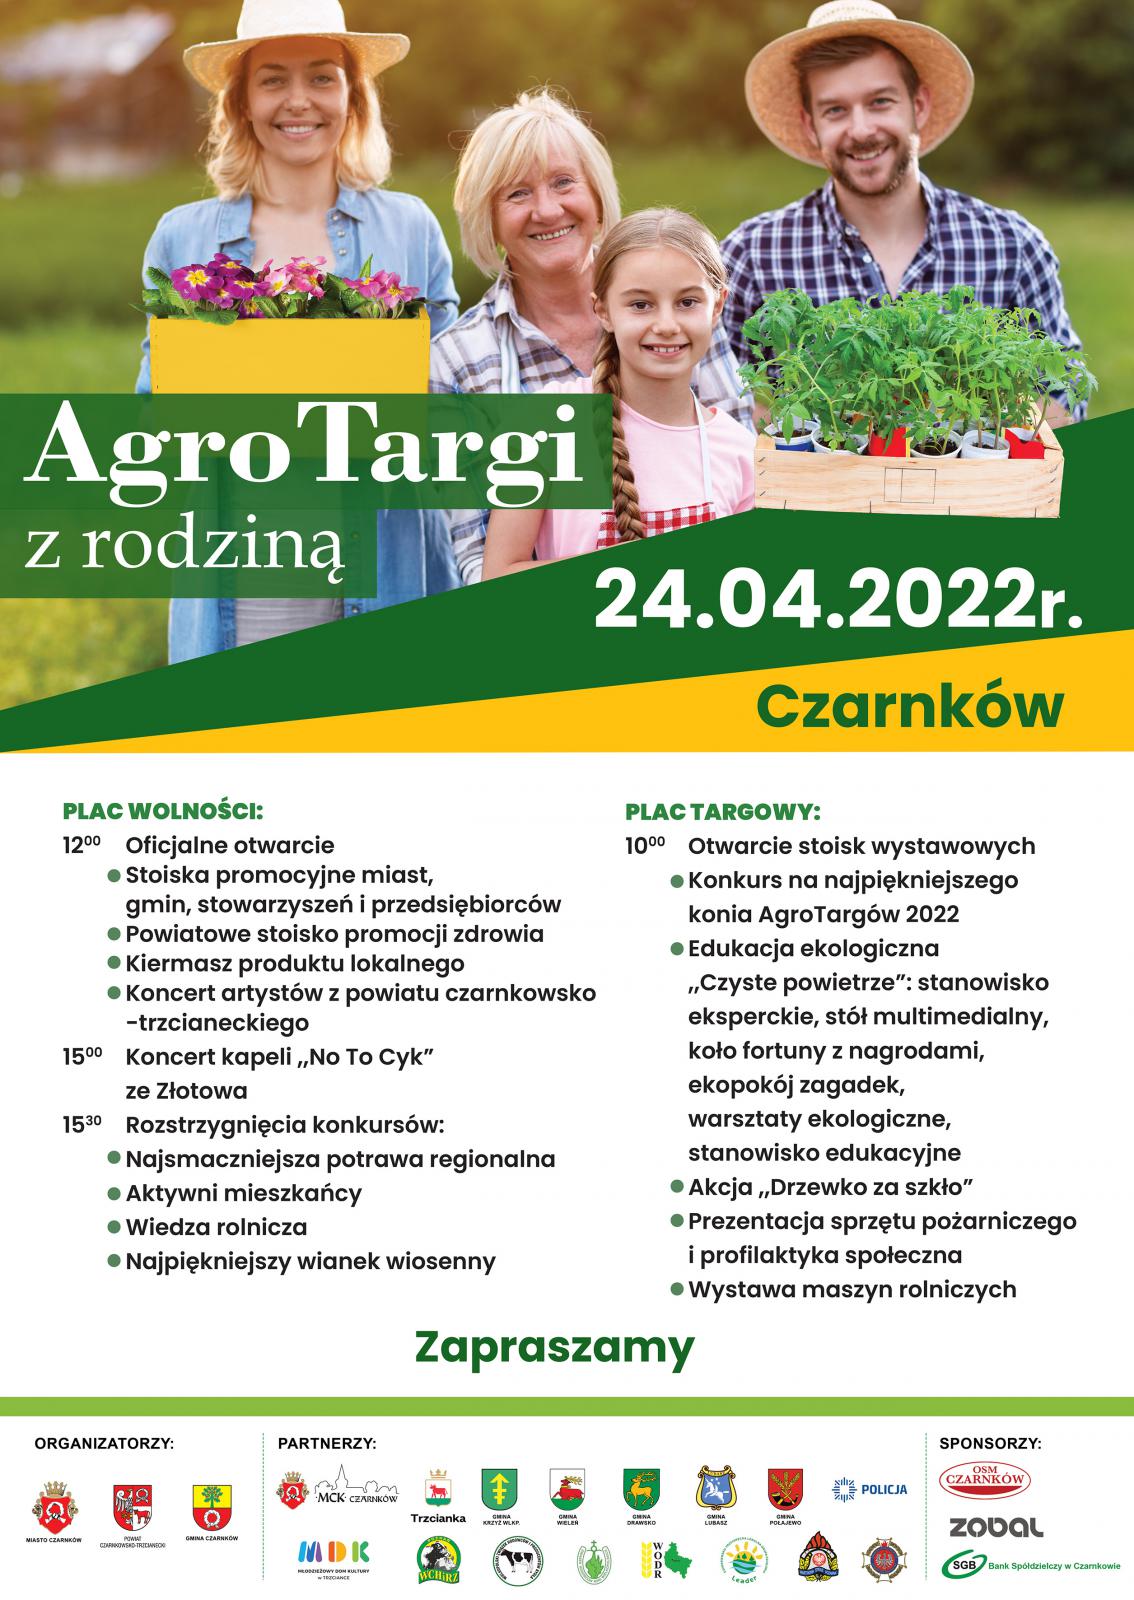 Agro Targi 2022 